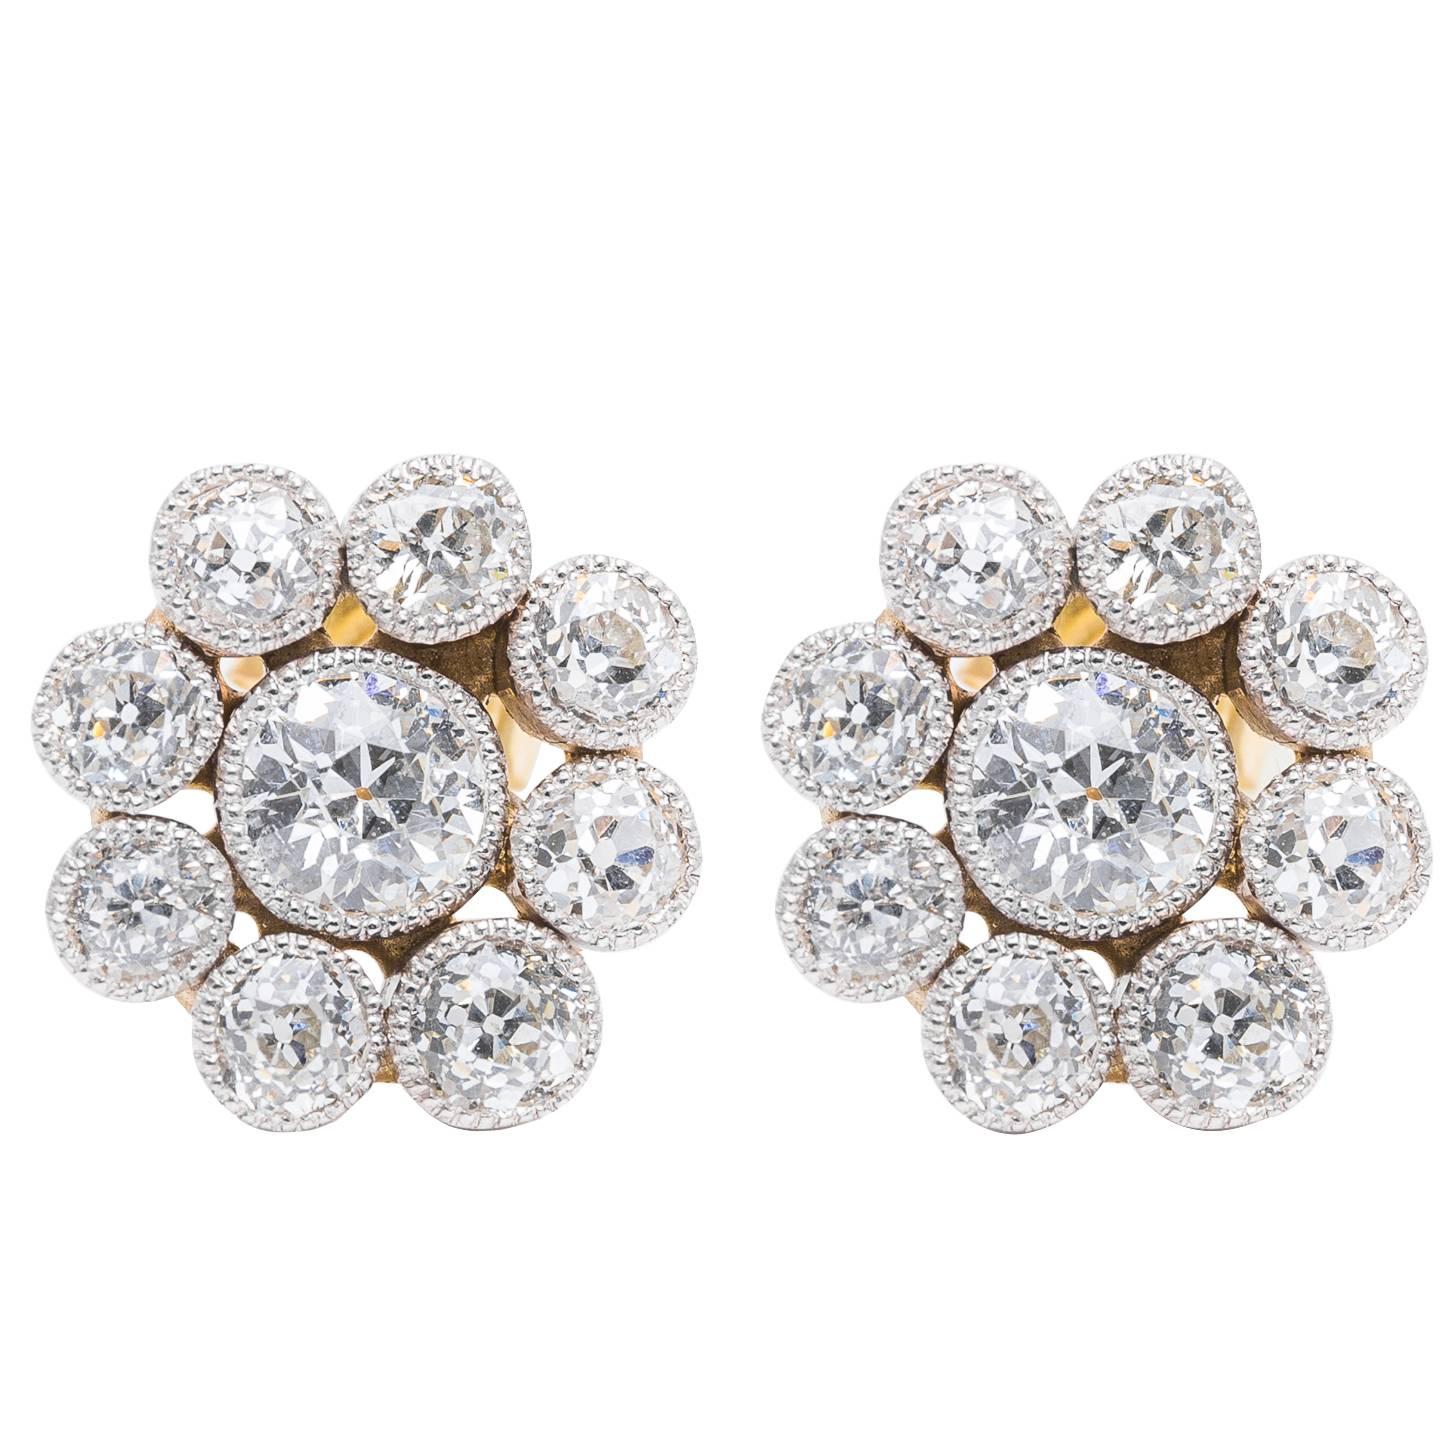 Edwardian 3.05 Carat Diamond Halo Earrings in Luxurious Platinum